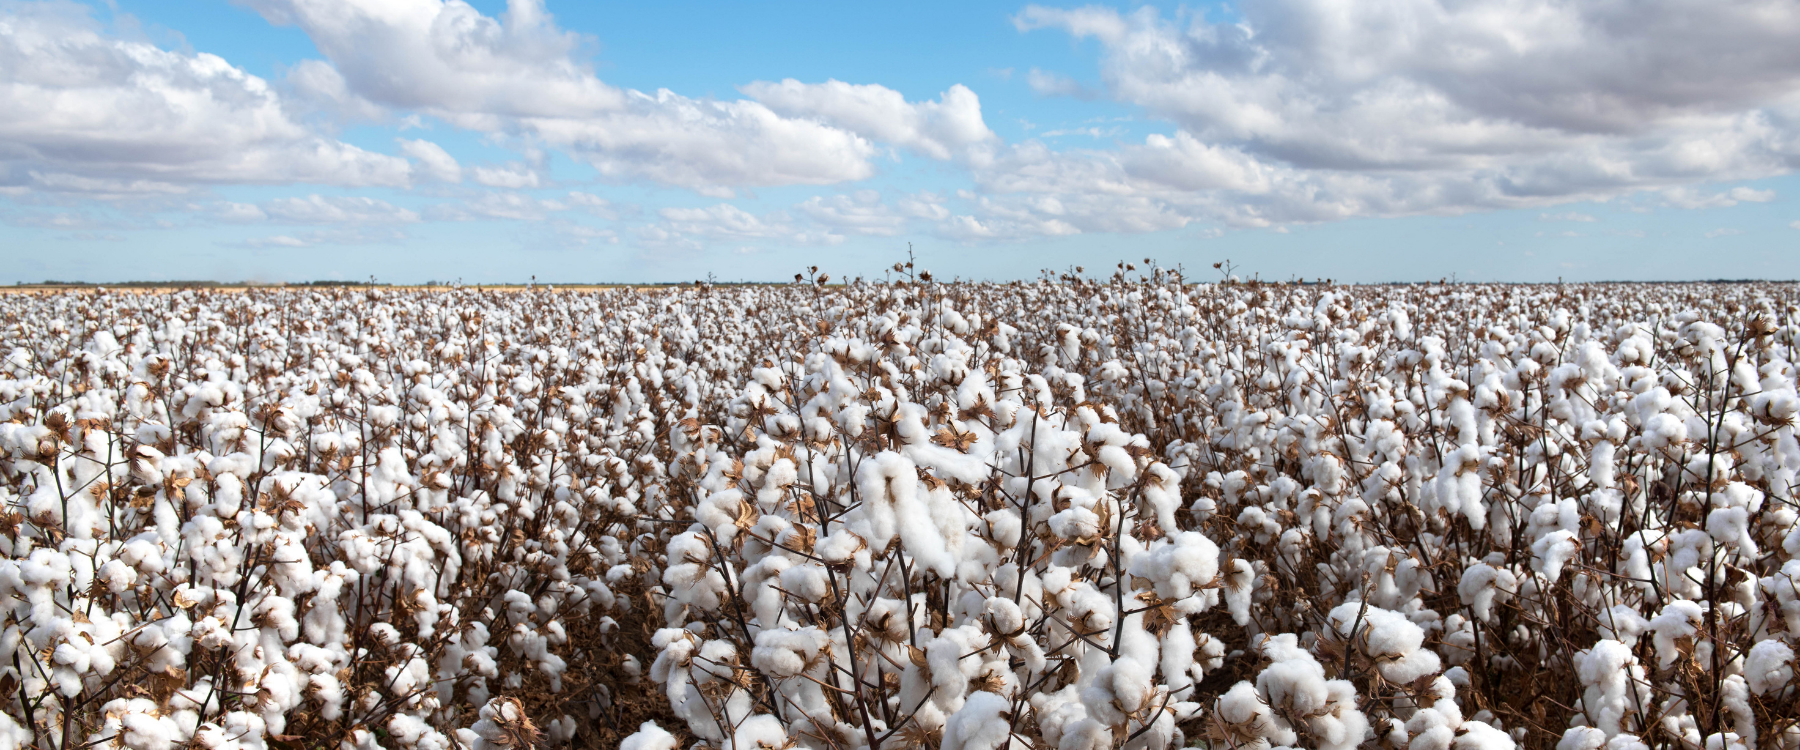 Organic Cotton Farming